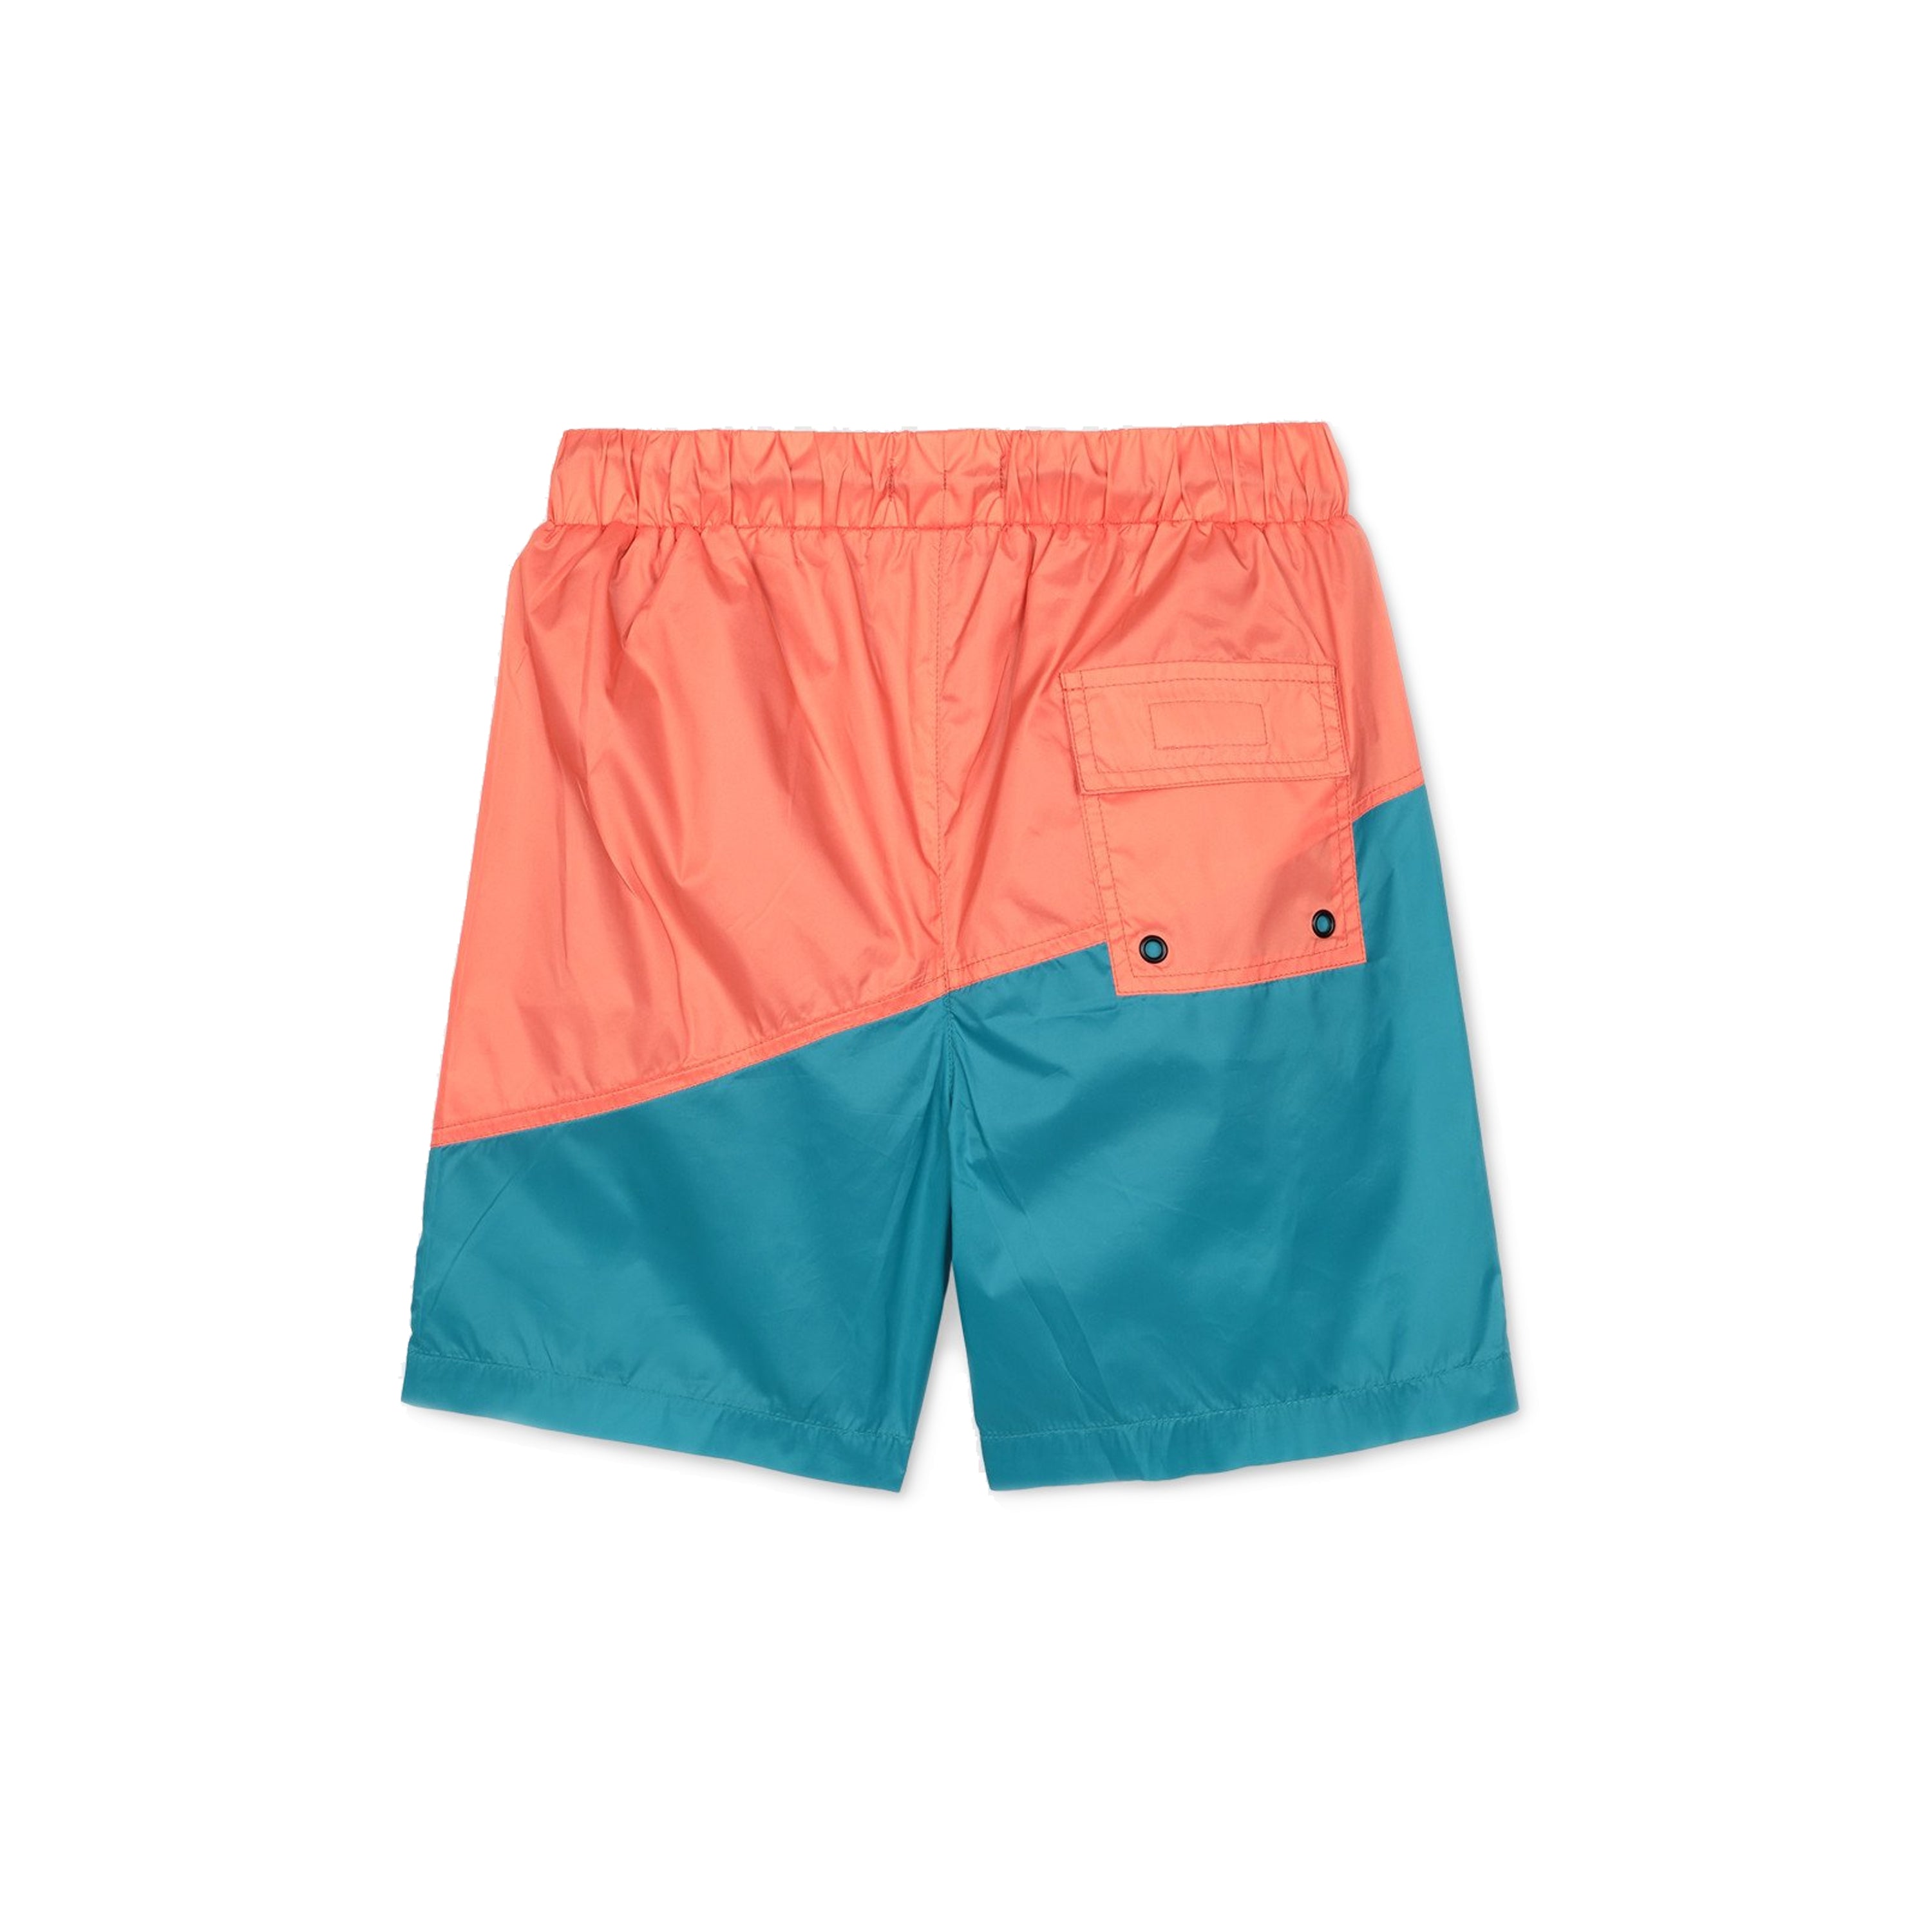 Boys Orange & Blue Swim Shorts